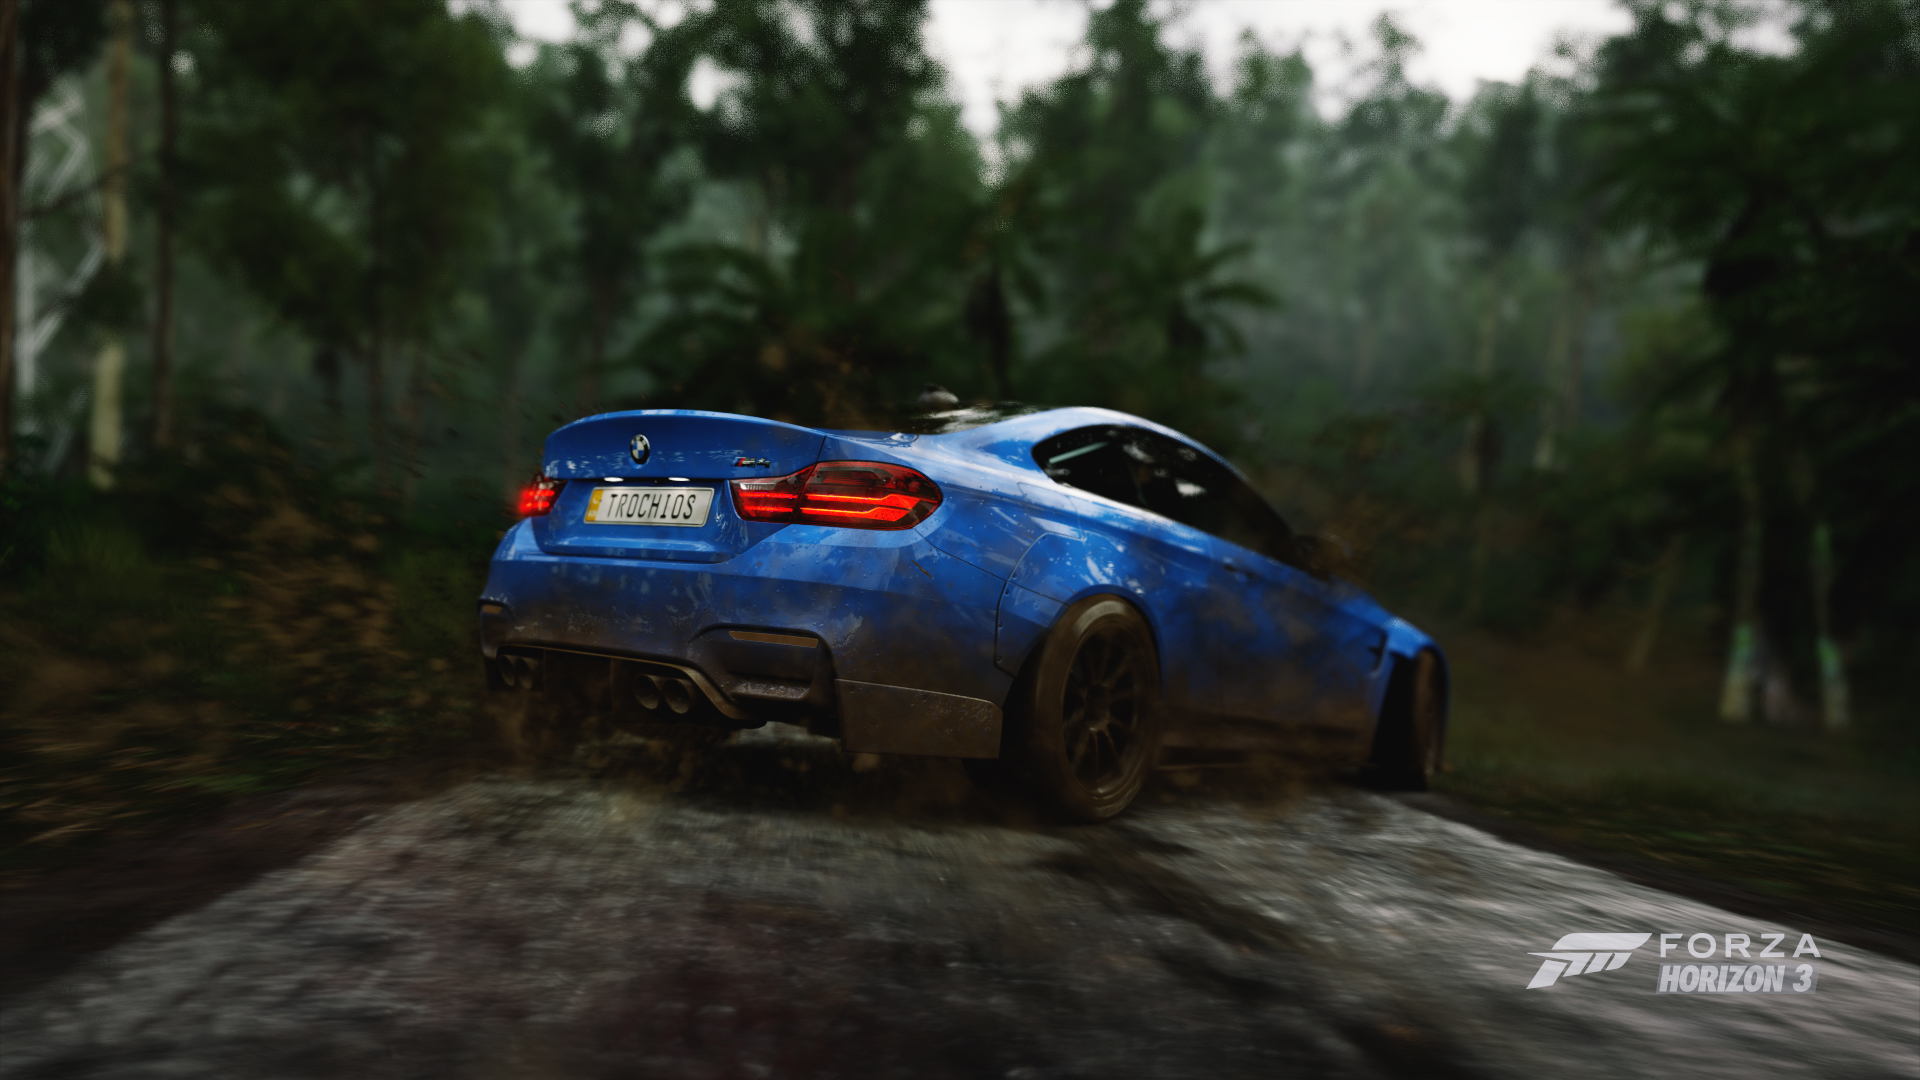 Forza Games, Forza horizon 3, BMW M4, Offroad, Mud, Drifting, Video games Wallpaper